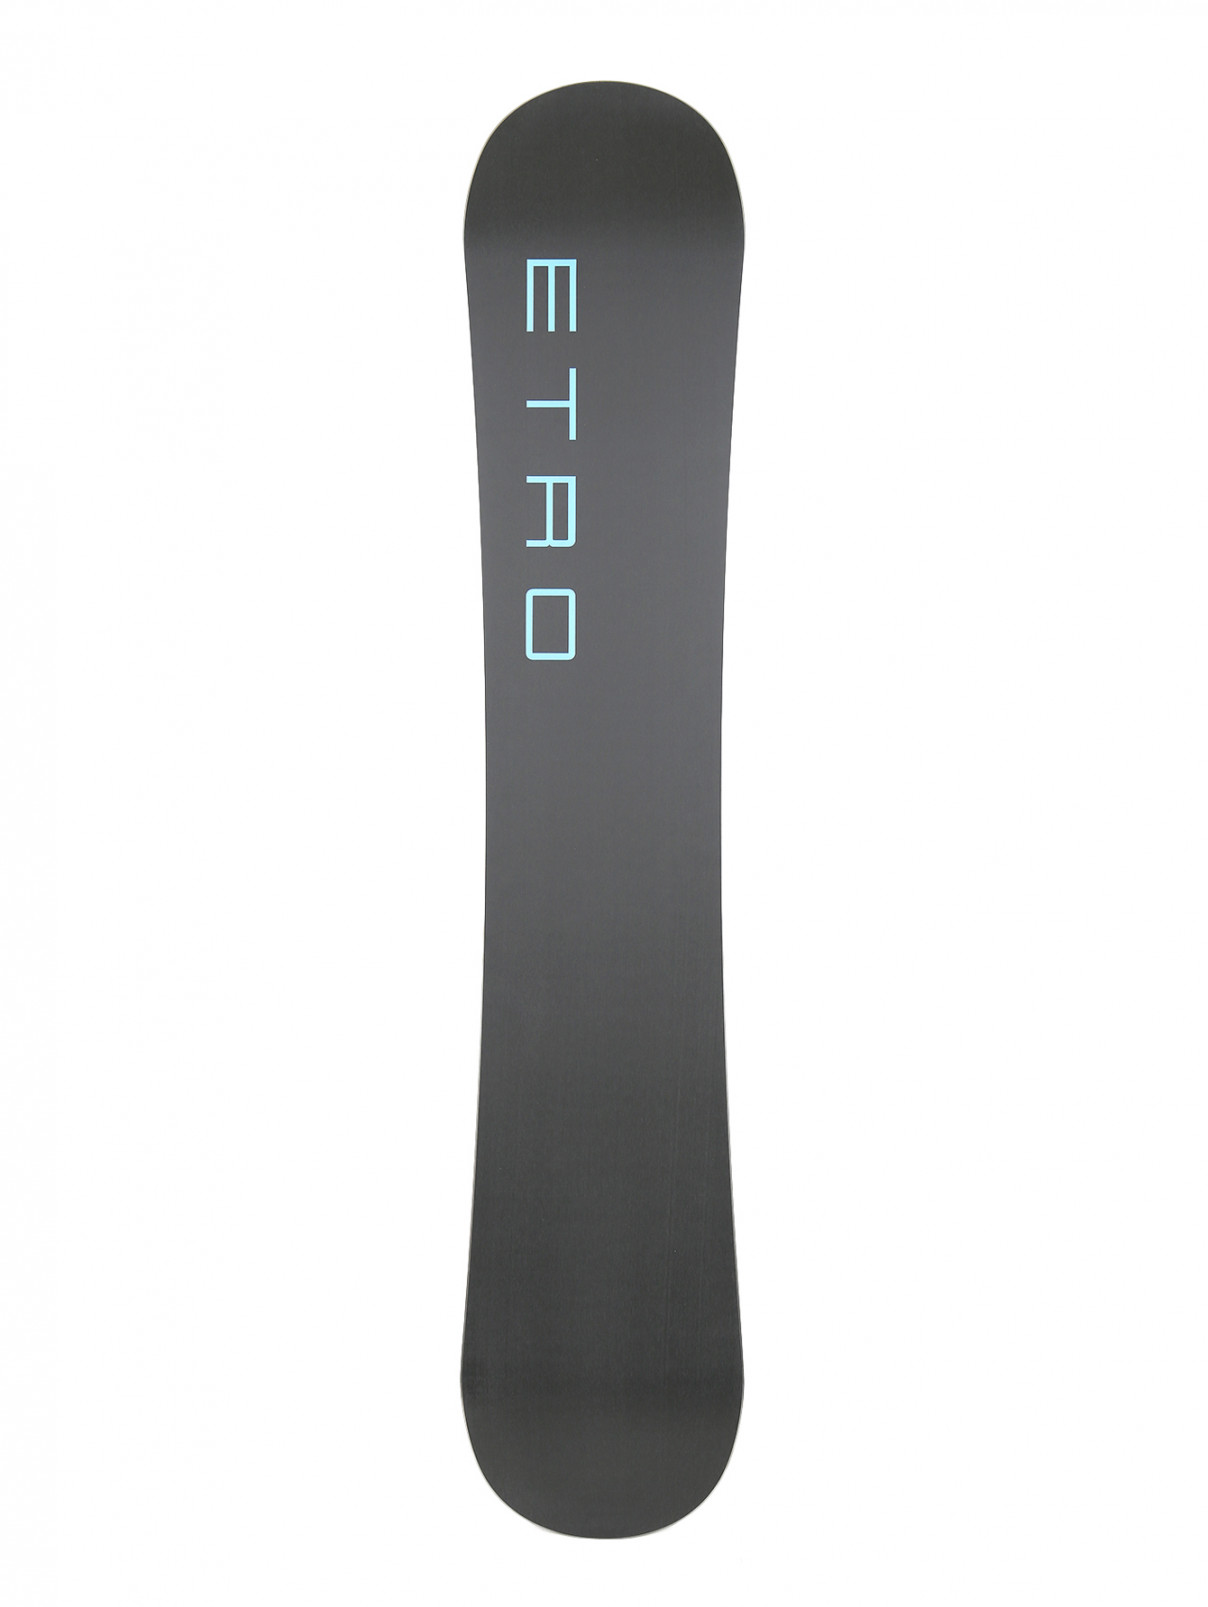 Сноуборд с узором Etro  –  Общий вид  – Цвет:  Узор